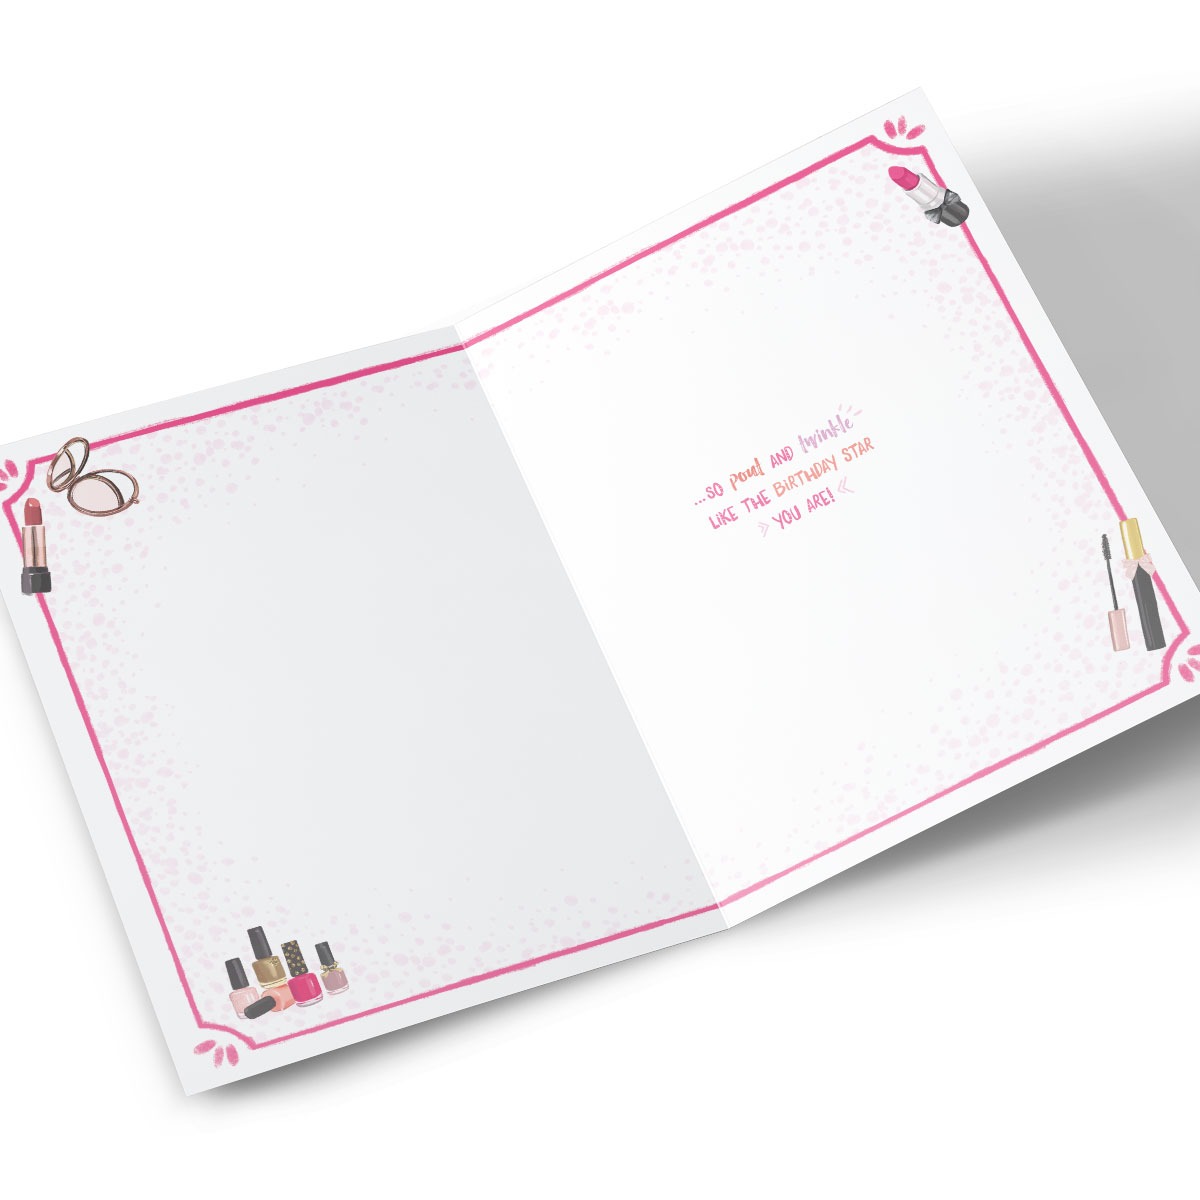 Personalised Editable Age Birthday Card - Lashes, Lippy & Sparkle